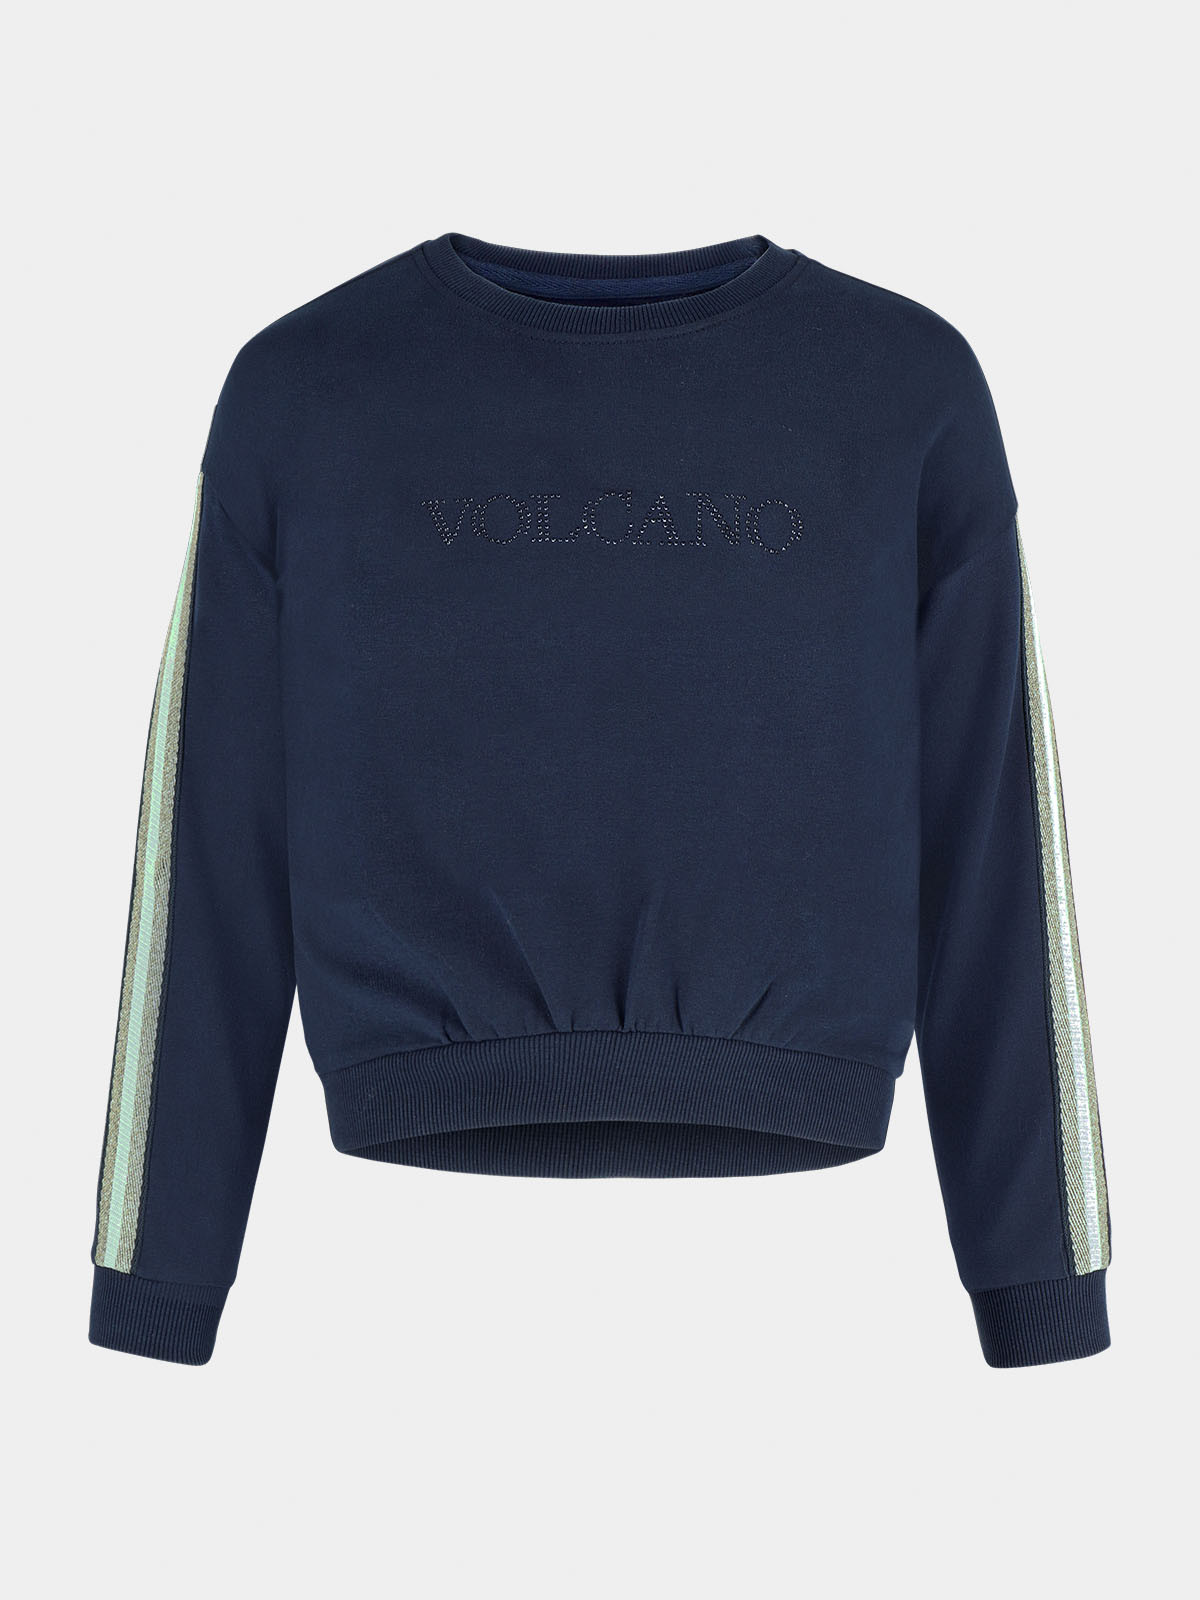 Volcano Regular Silhouette Sweatshirt B-Nino Junior G01382-W22 Námořnická modrá 146-152